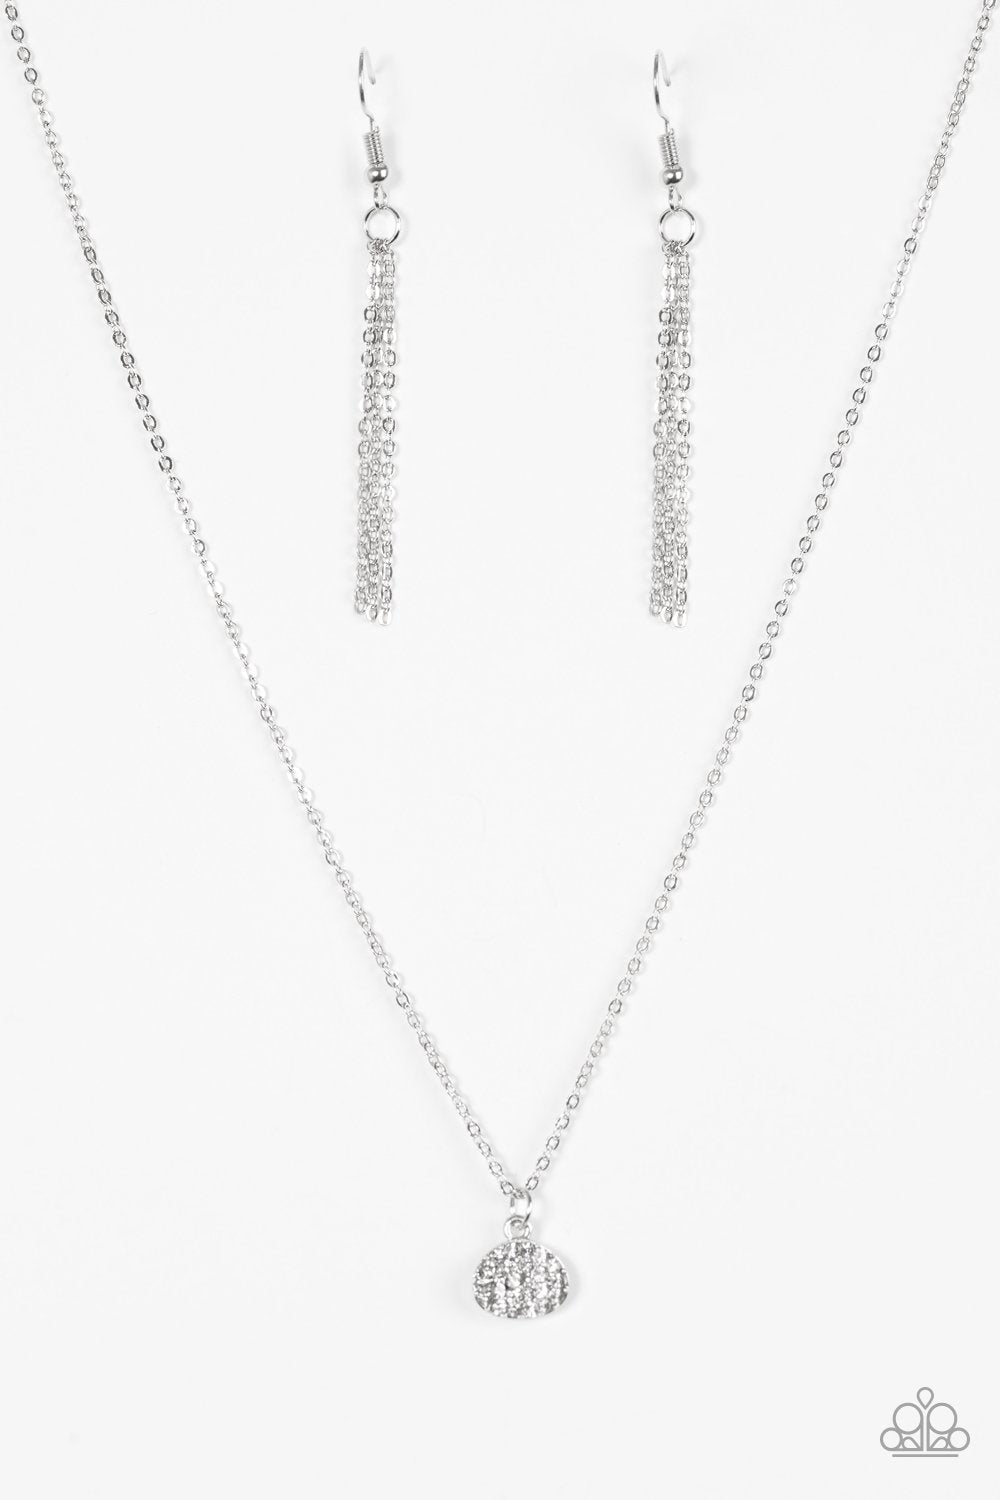 Diamond Debonair Silver and White Rhinestone Necklace - Paparazzi Accessories-CarasShop.com - $5 Jewelry by Cara Jewels